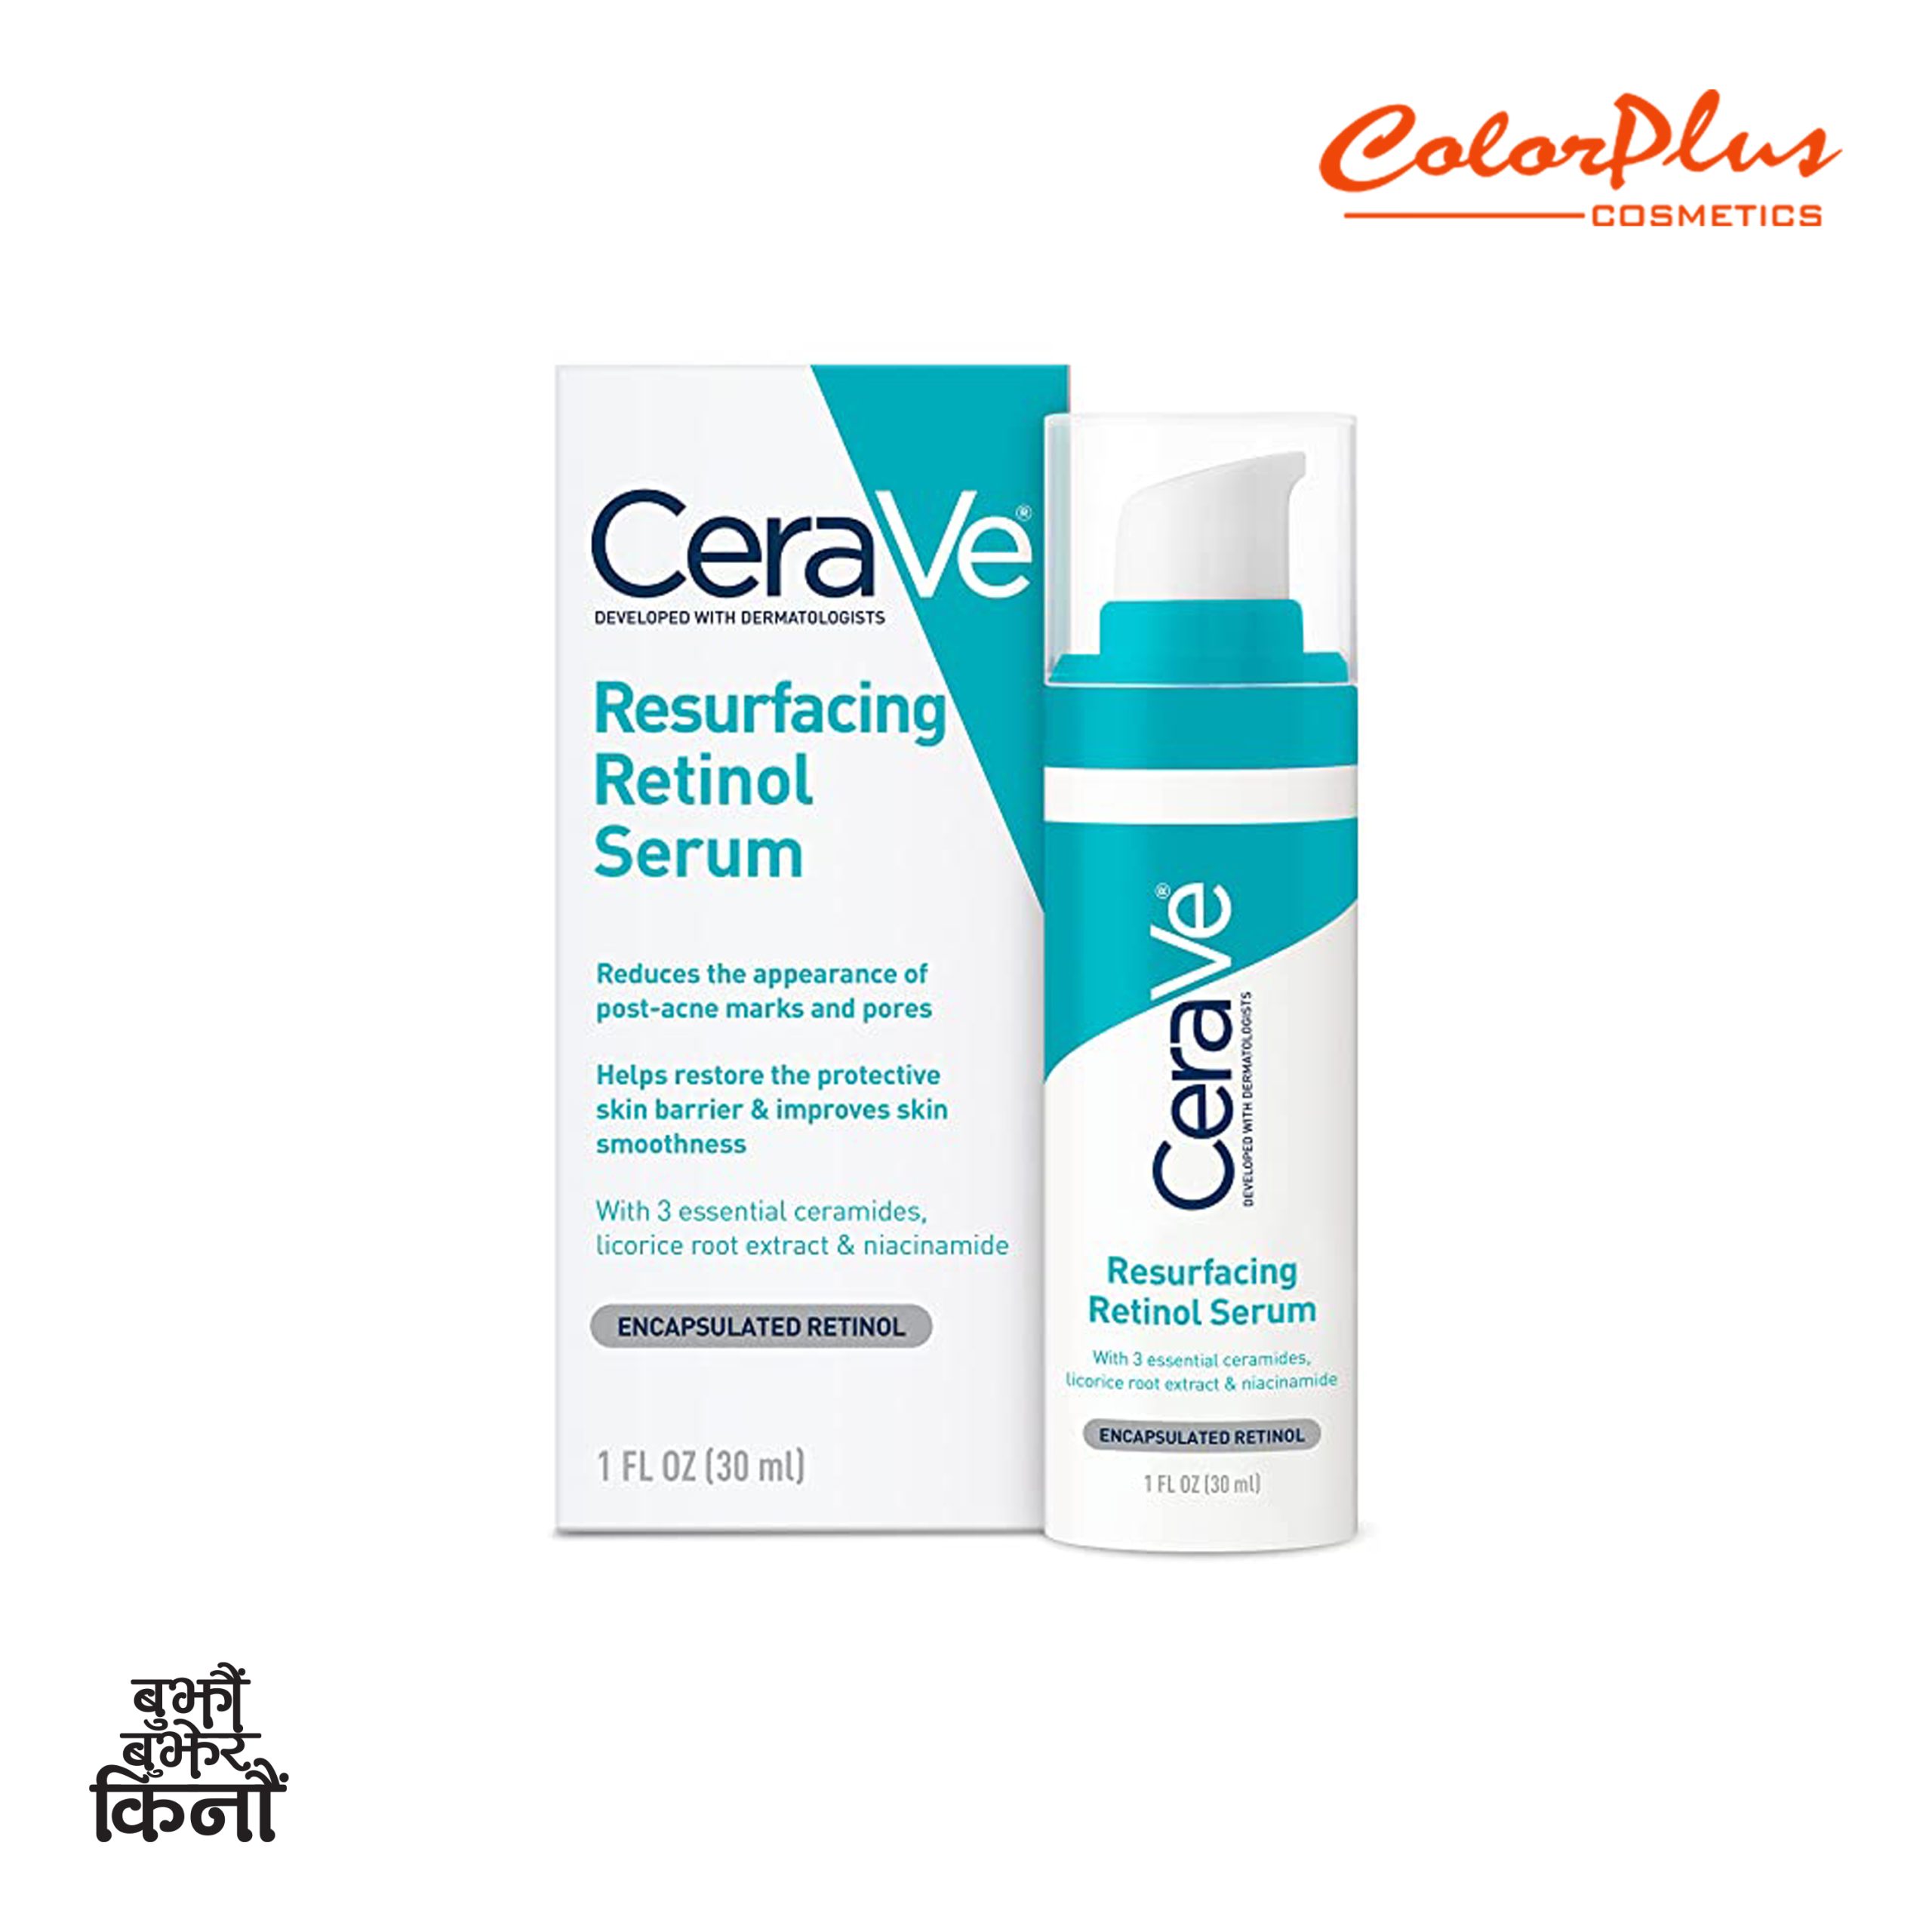 ColorPlus Cosmetics CeraVe Resurfacing Retinol Serum scaled